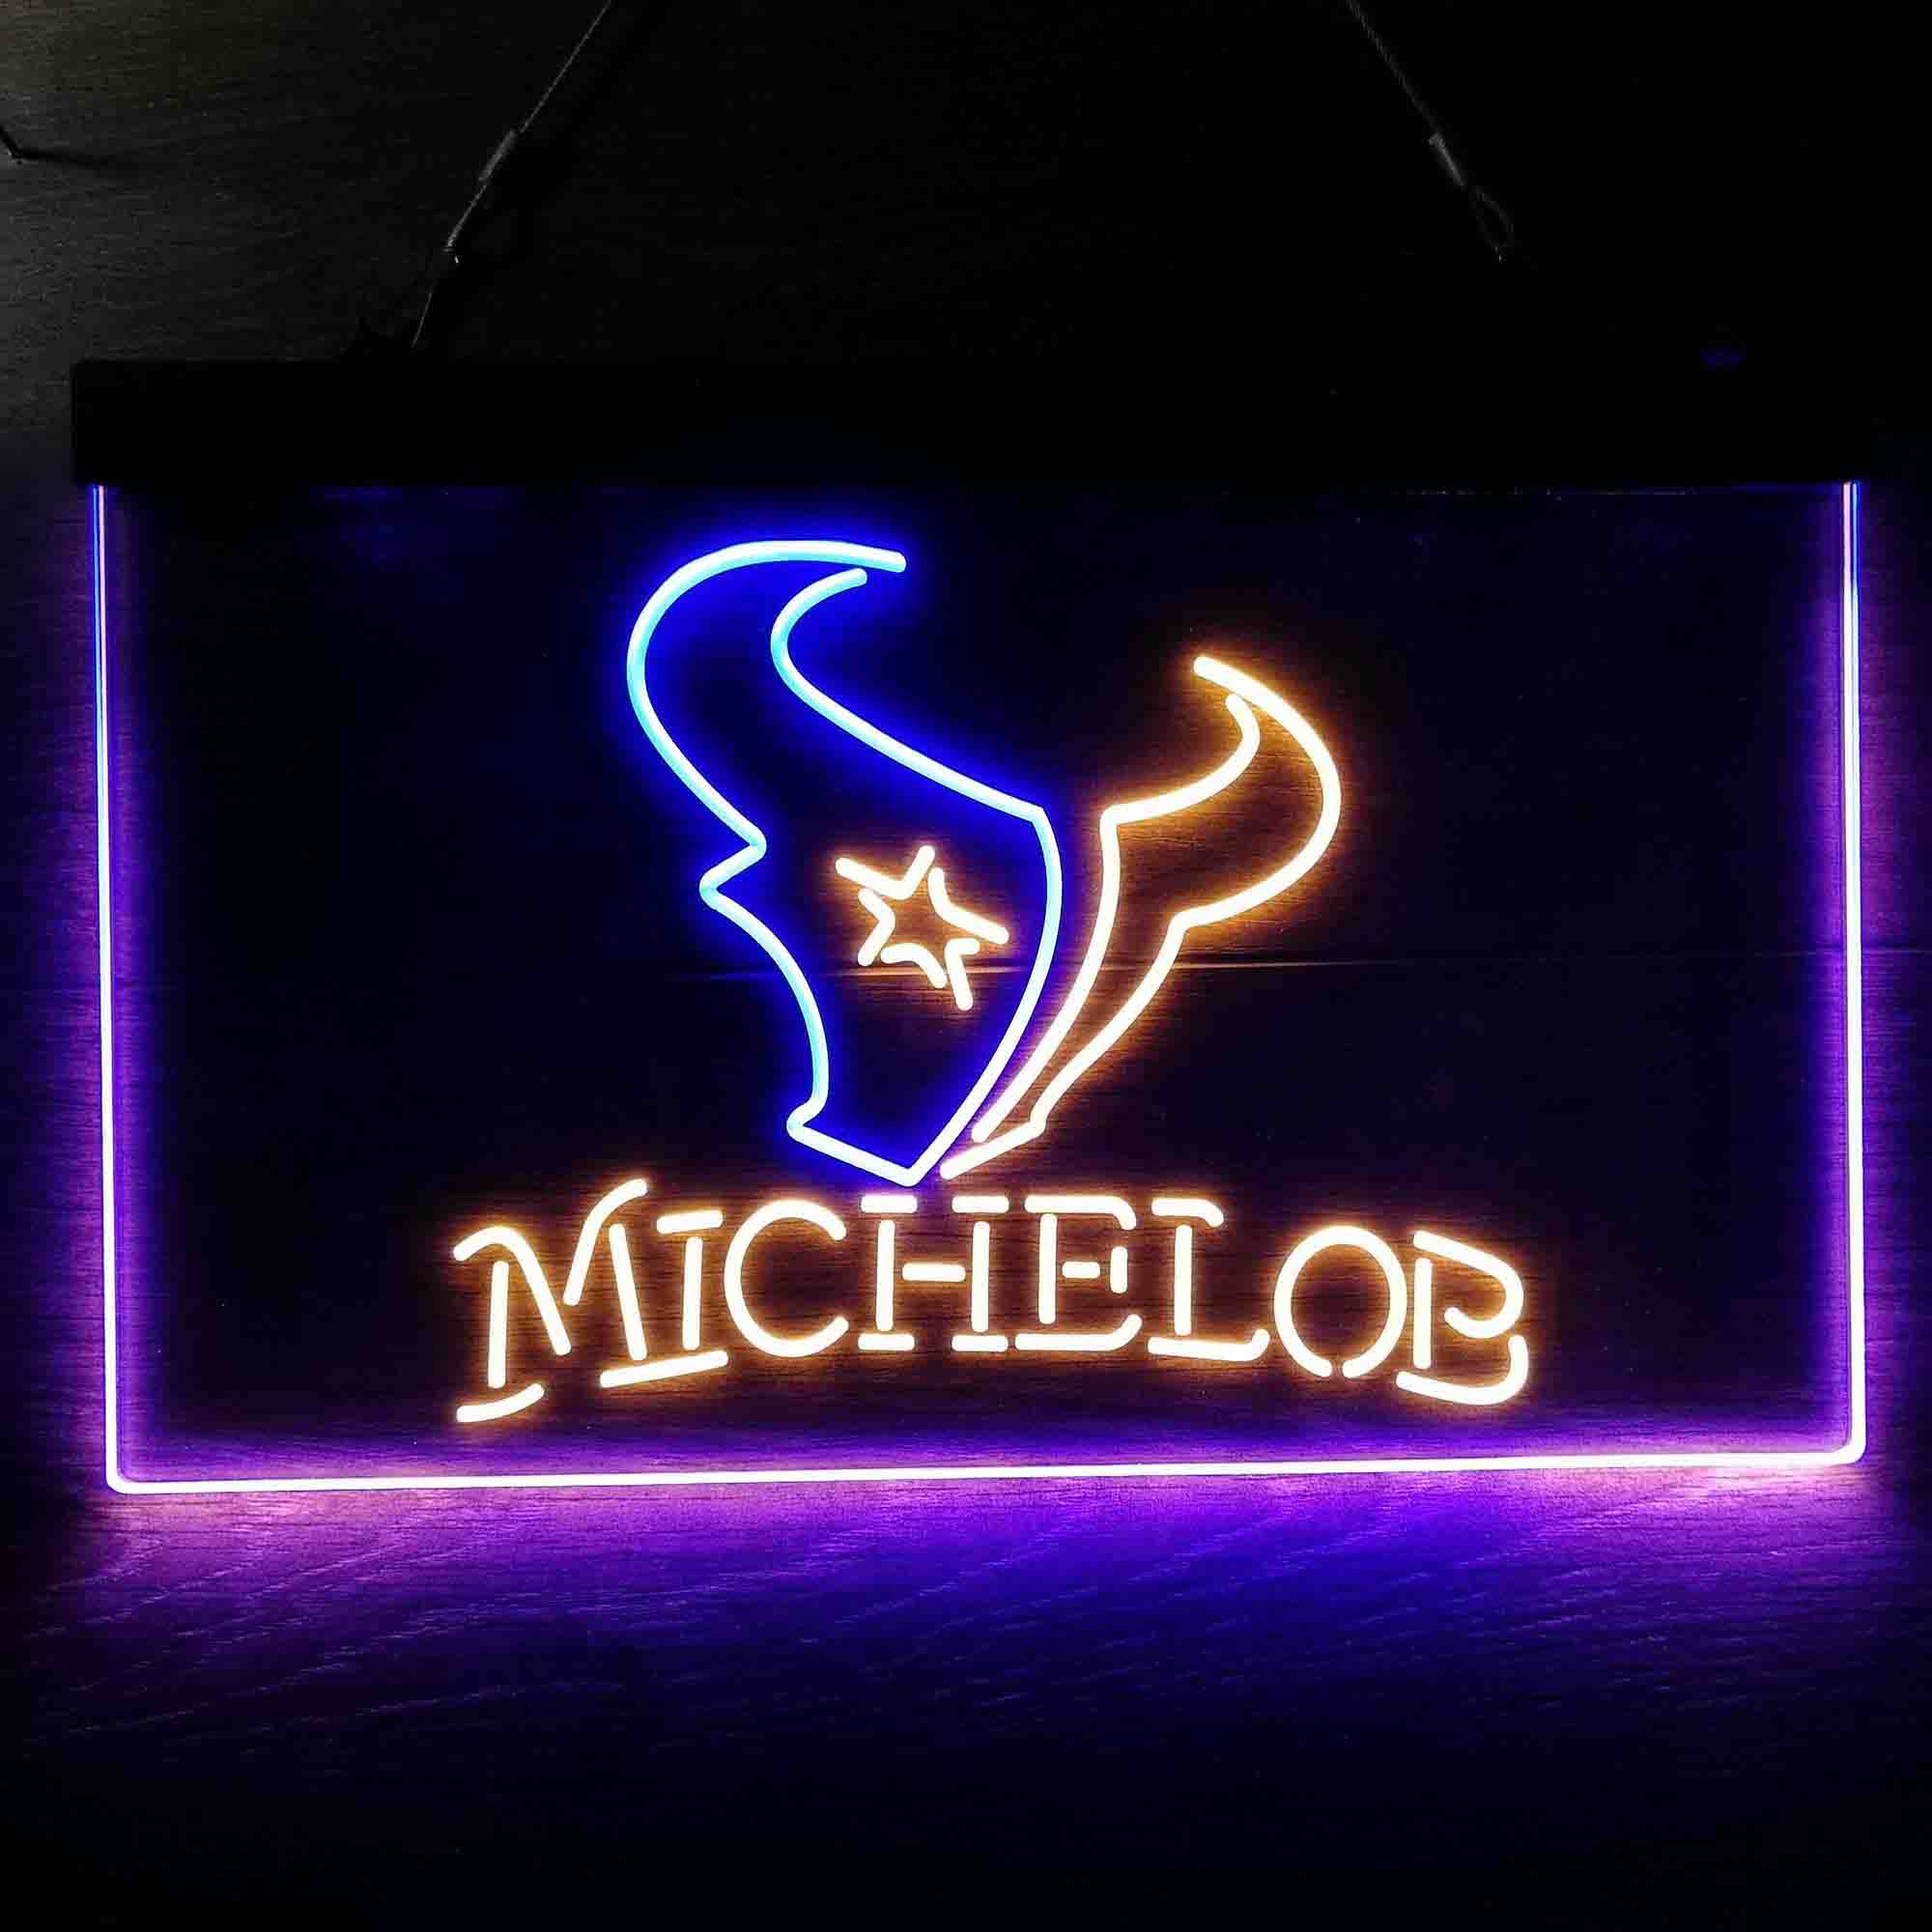 Michelob Bar Houston Texans Est. 2002 LED Neon Sign